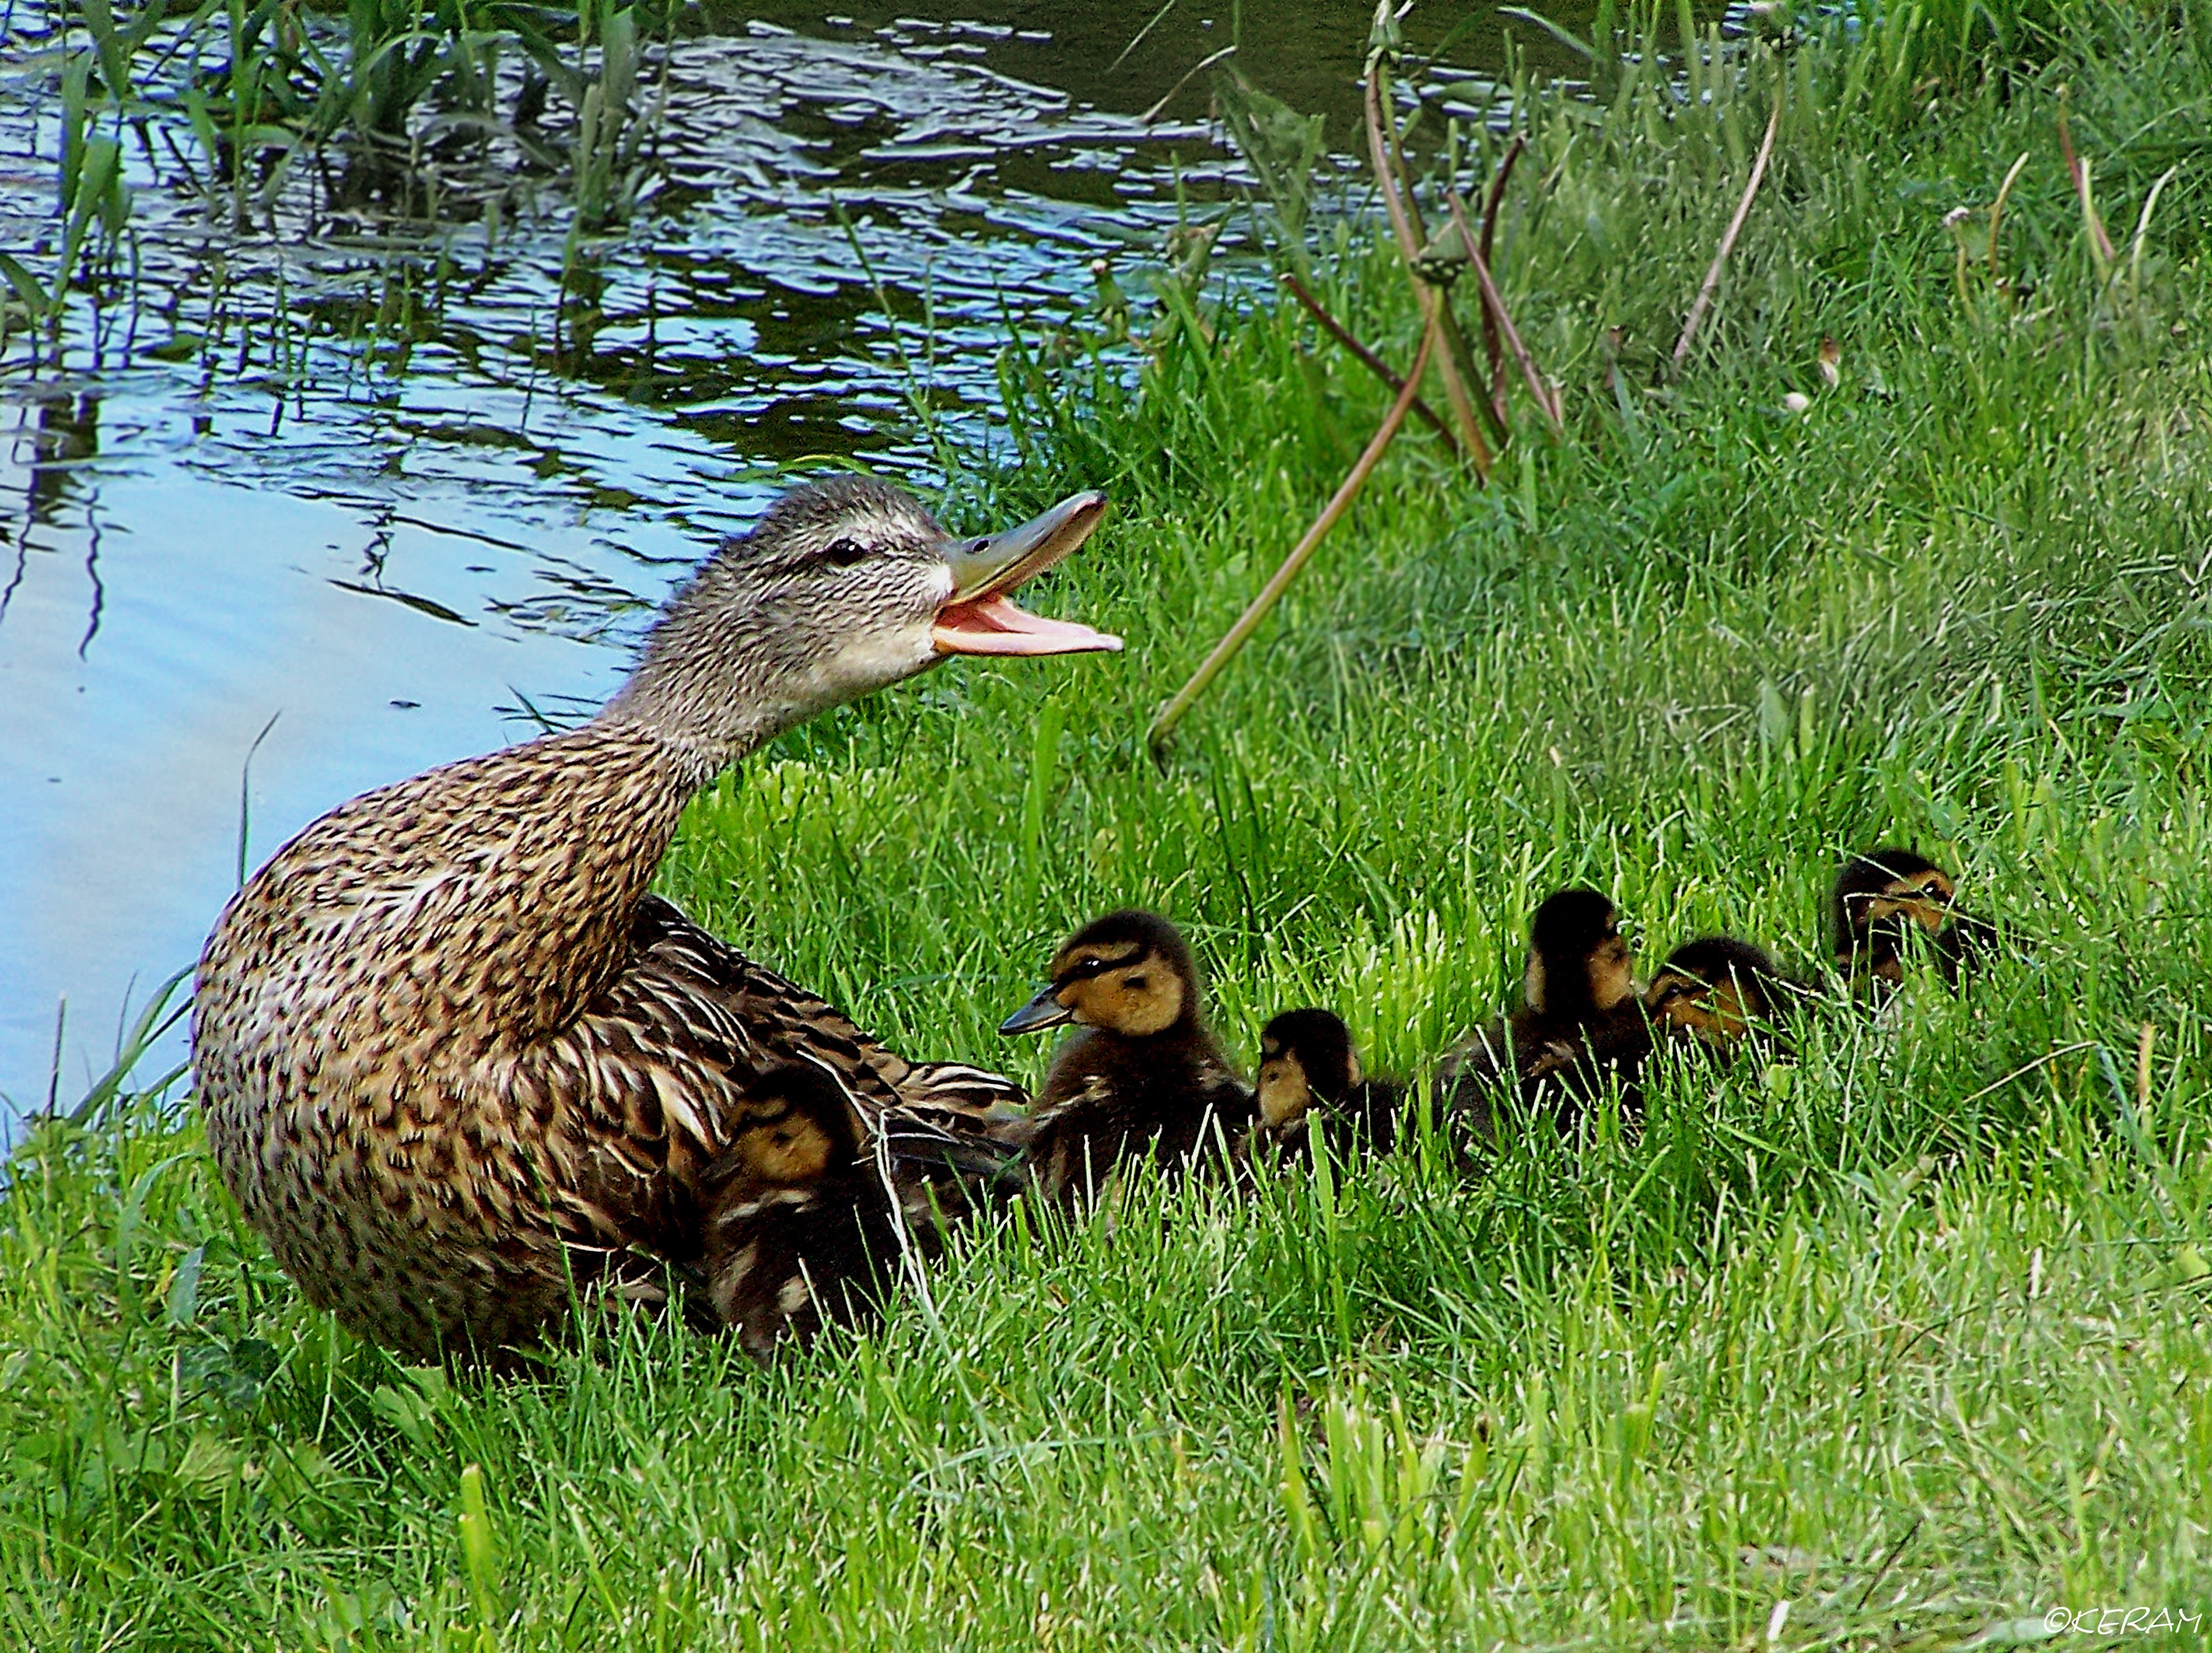 Family, Defense, Ducks, grass, animals in the wild